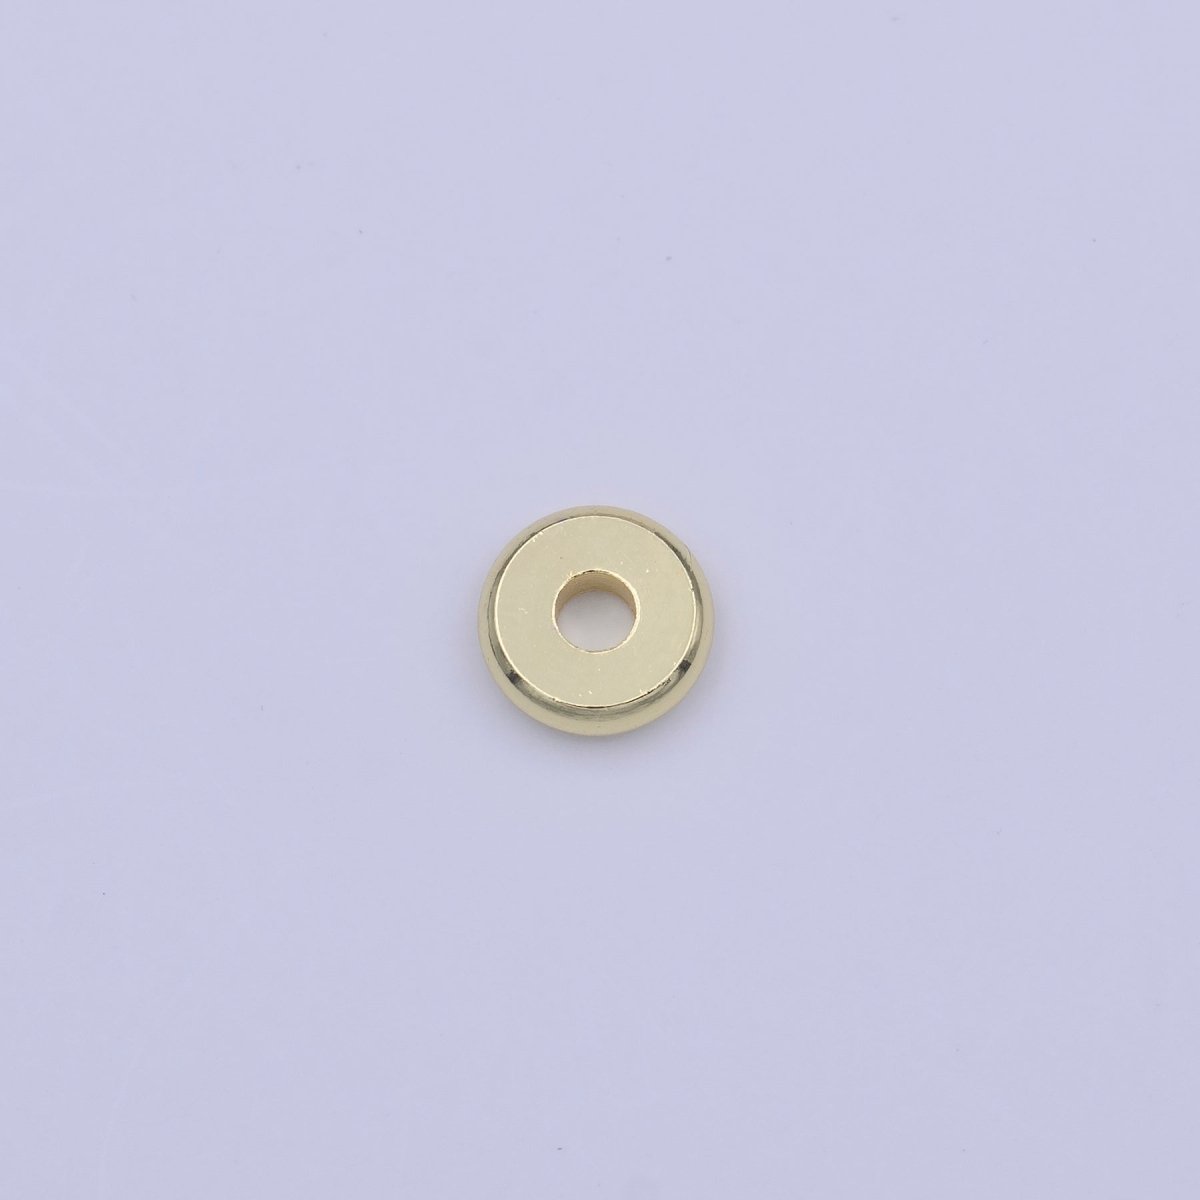 50 Pieces Gold Thin 3mm, 4mm, 5mm, 6mm, 7mm, 8mm Spacer Bead Jewelry Making Supply | B-145 B-498 B-220 B-499 B-502 B-603 - DLUXCA